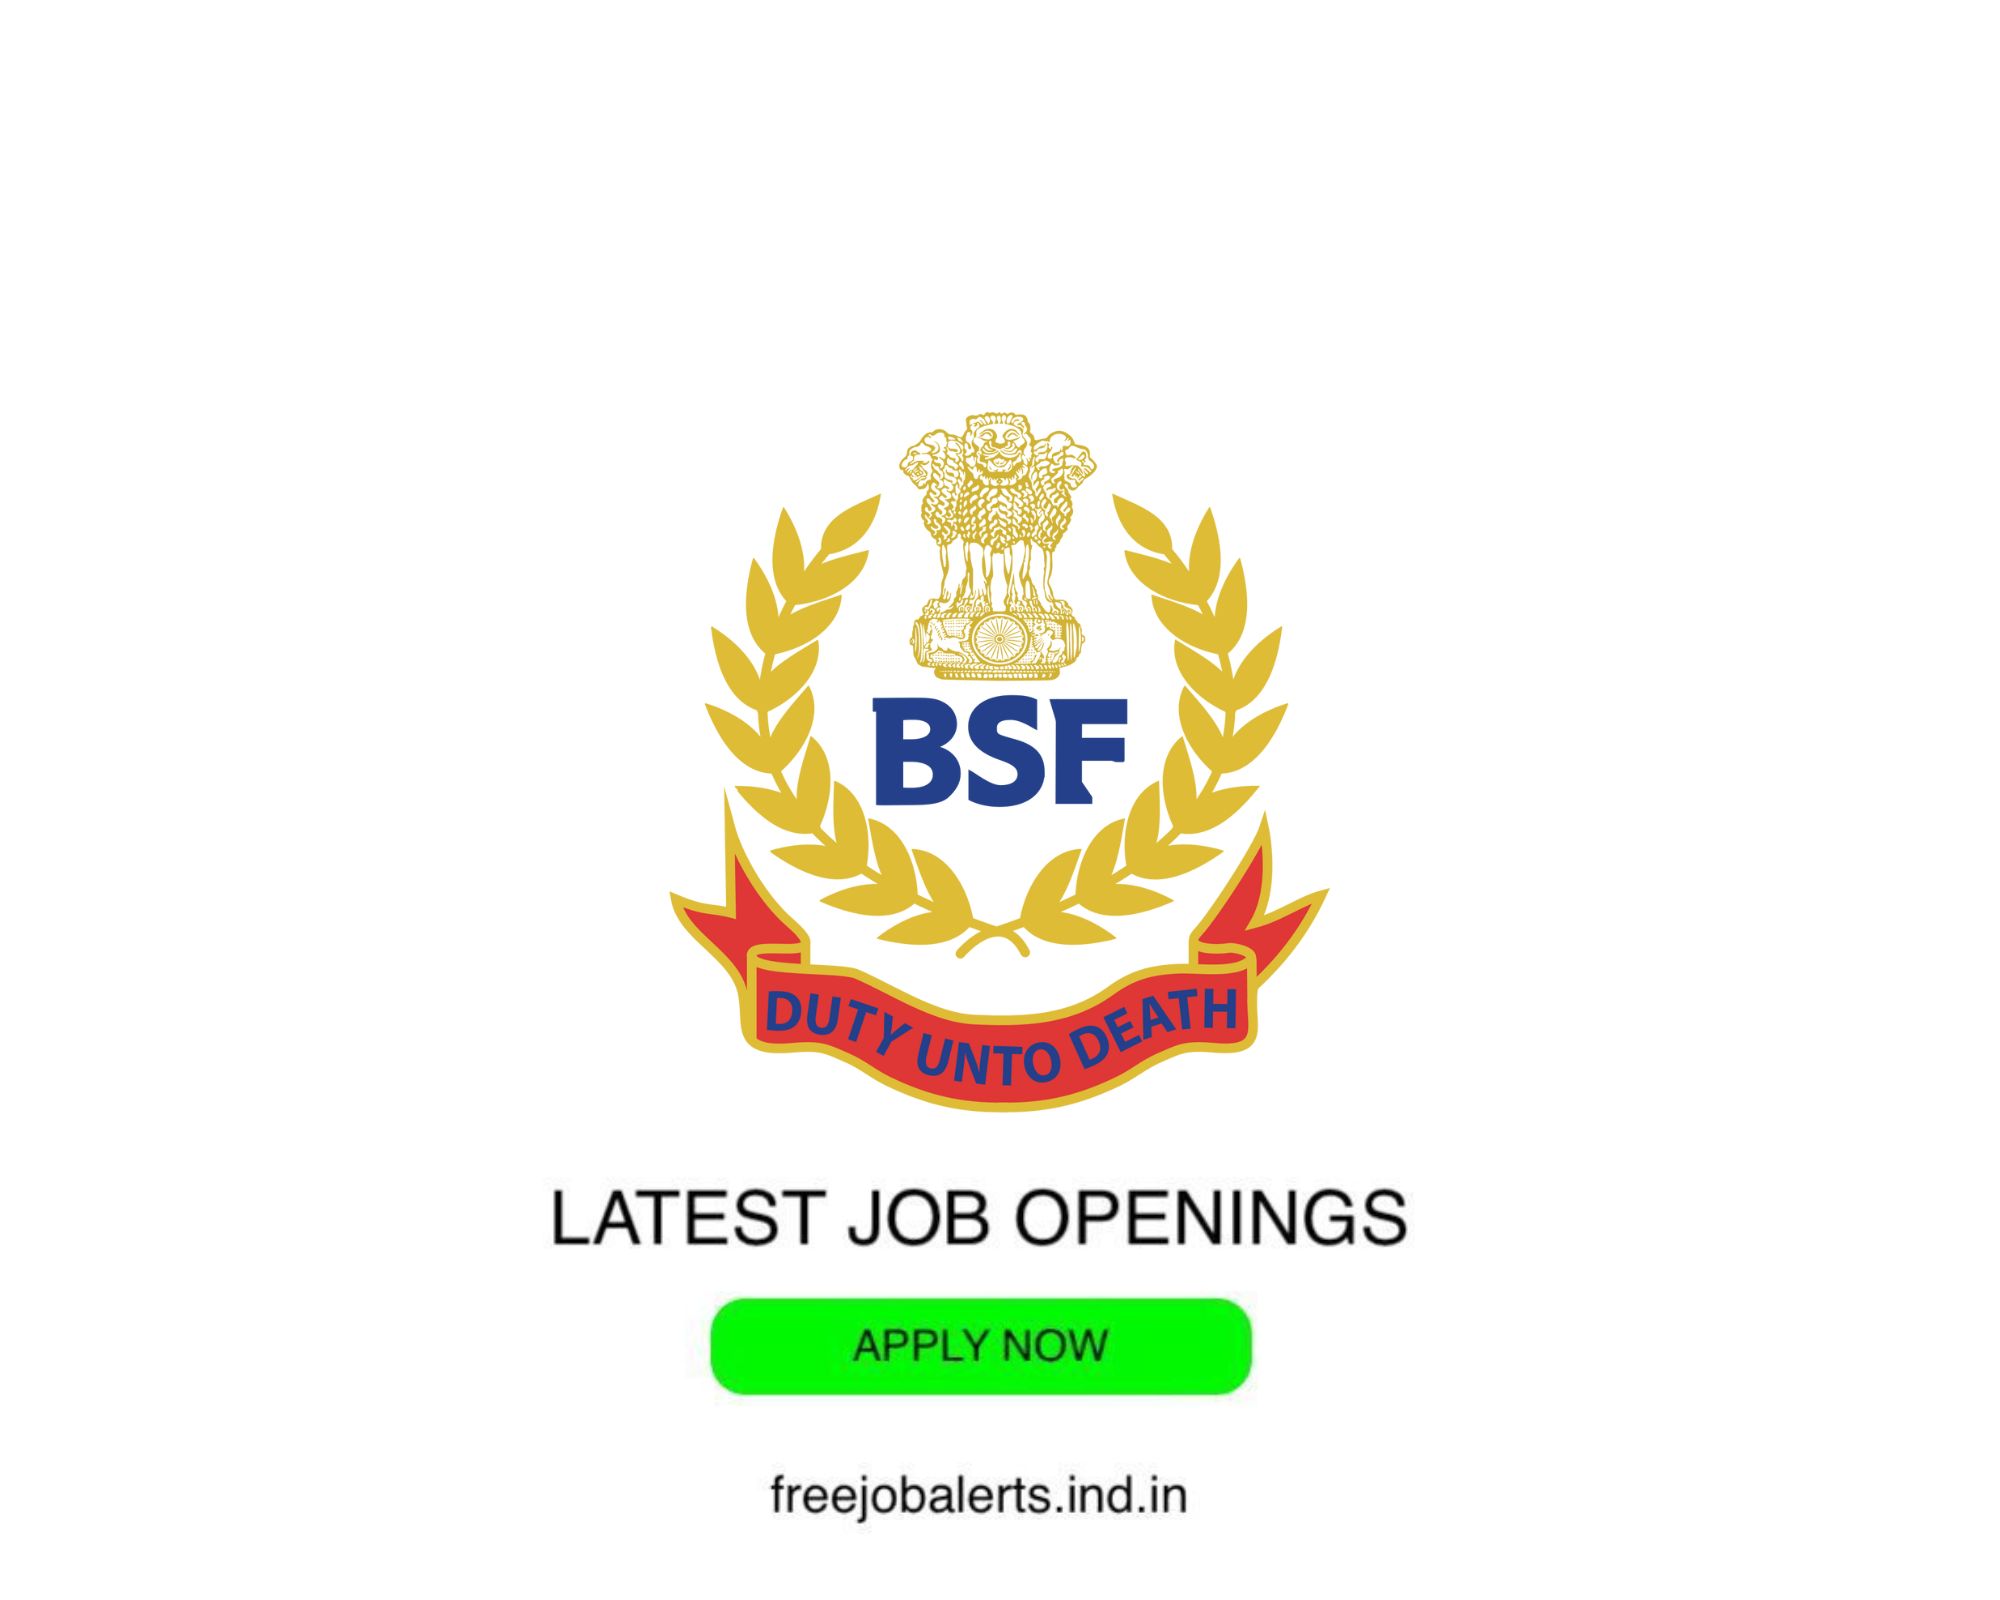 BSF - Border Security Force - Latest Govt job openings - Free job alerts, Indian Govt Jobs